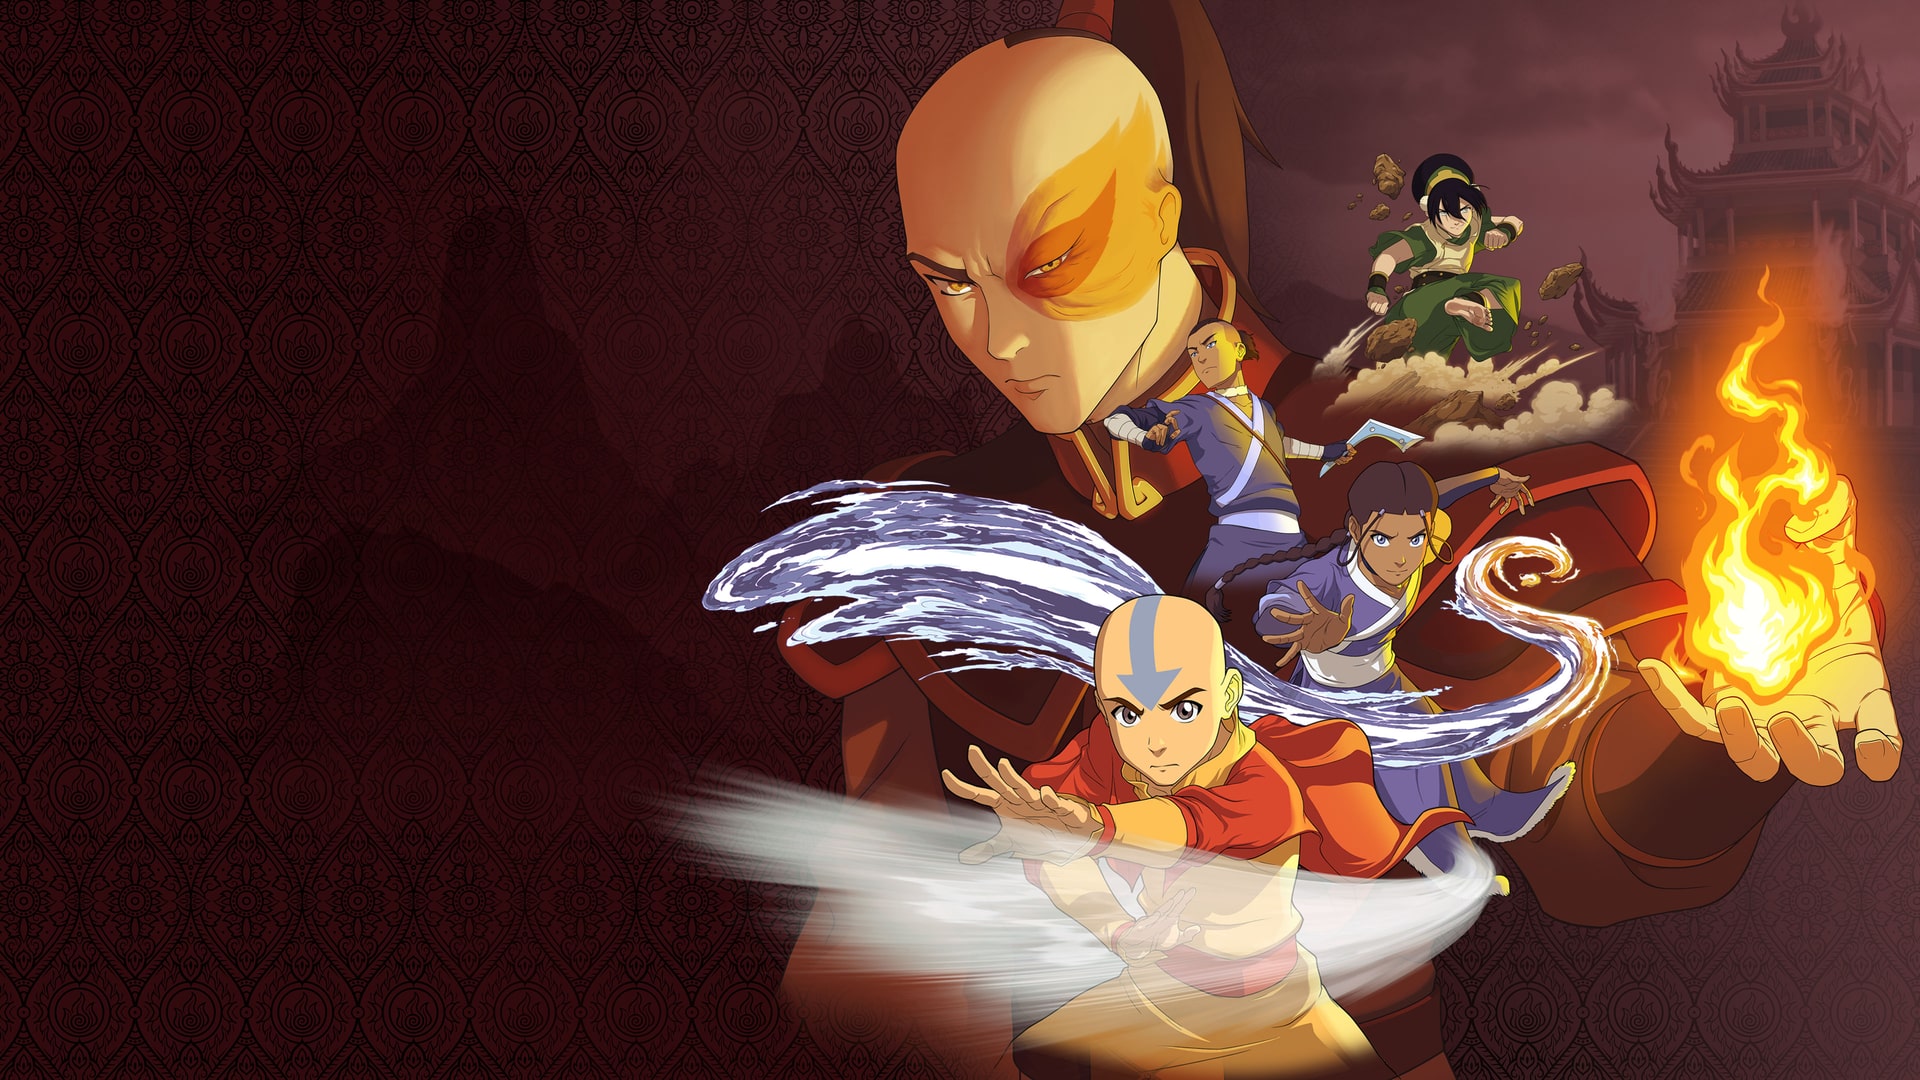 AVATAR THE LAST AIRBENDER Quest for Balance PS4 - Catalogo  Mega-Mania A  Loja dos Jogadores - Jogos, Consolas, Playstation, Xbox, Nintendo